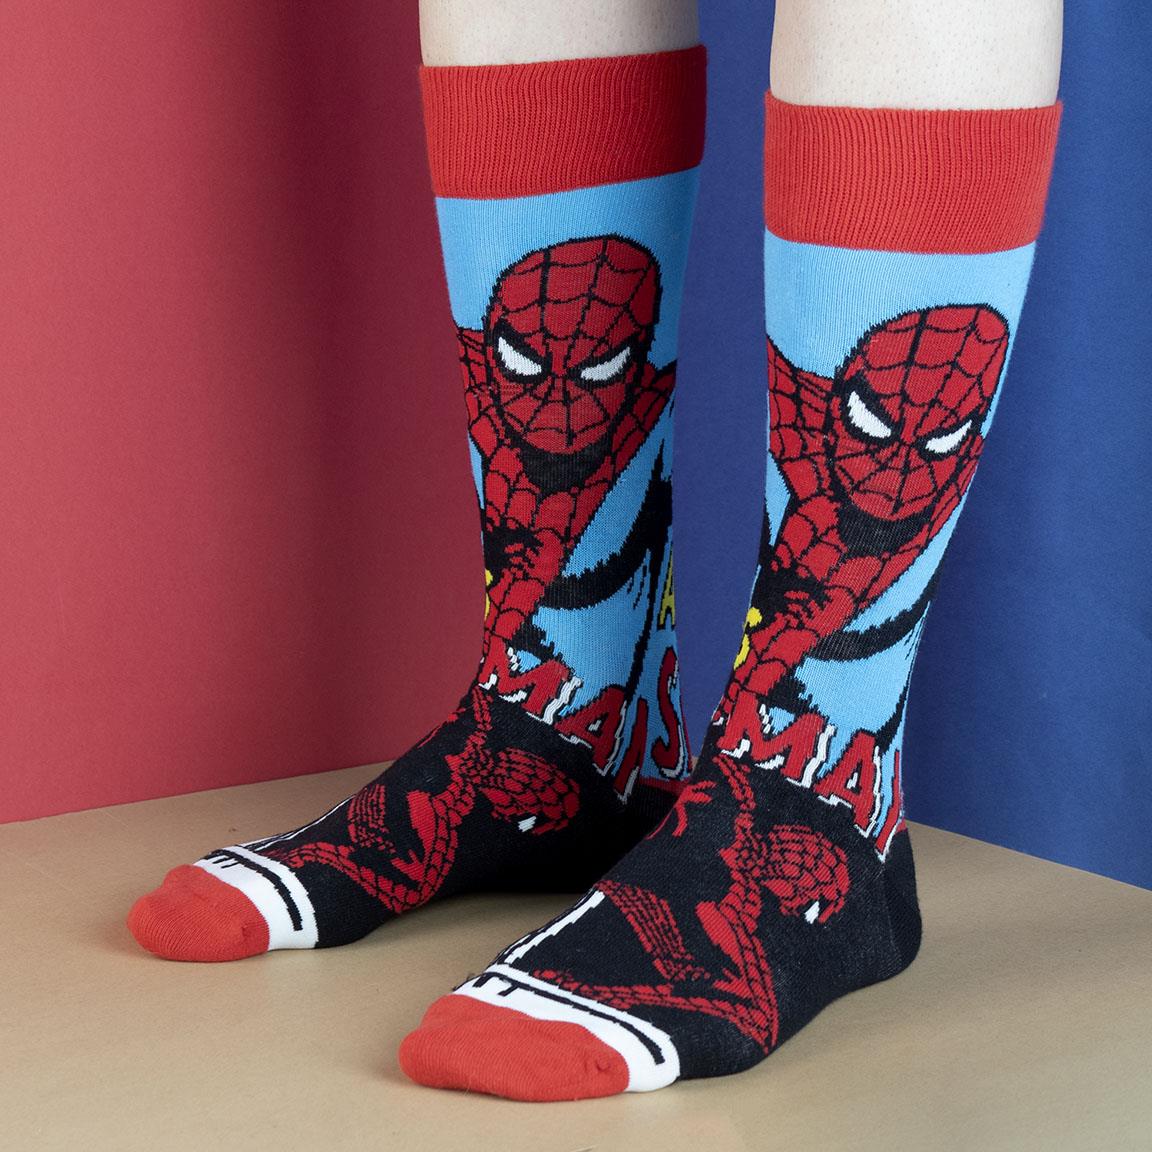 Amazing Spider-Man Socks